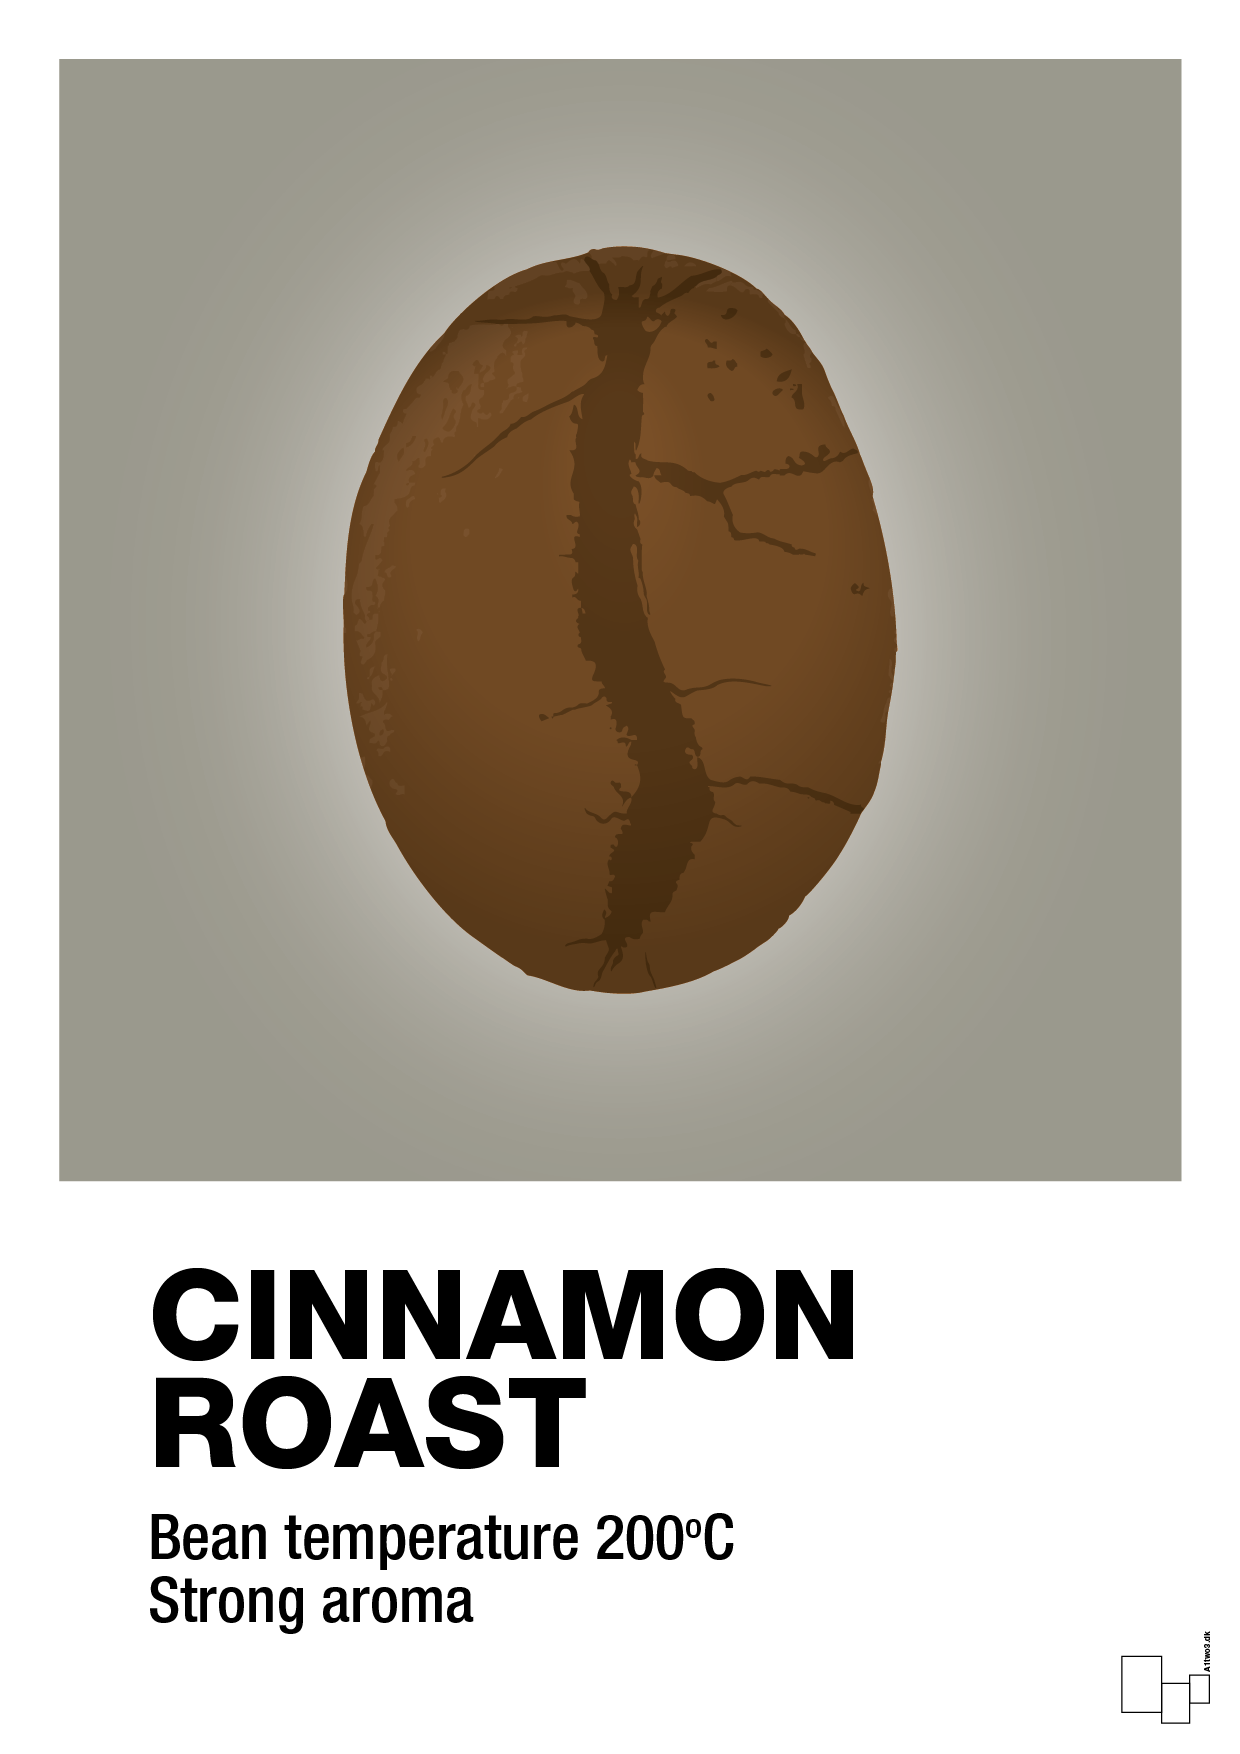 cinnamom roast - Plakat med Mad & Drikke i Battleship Gray